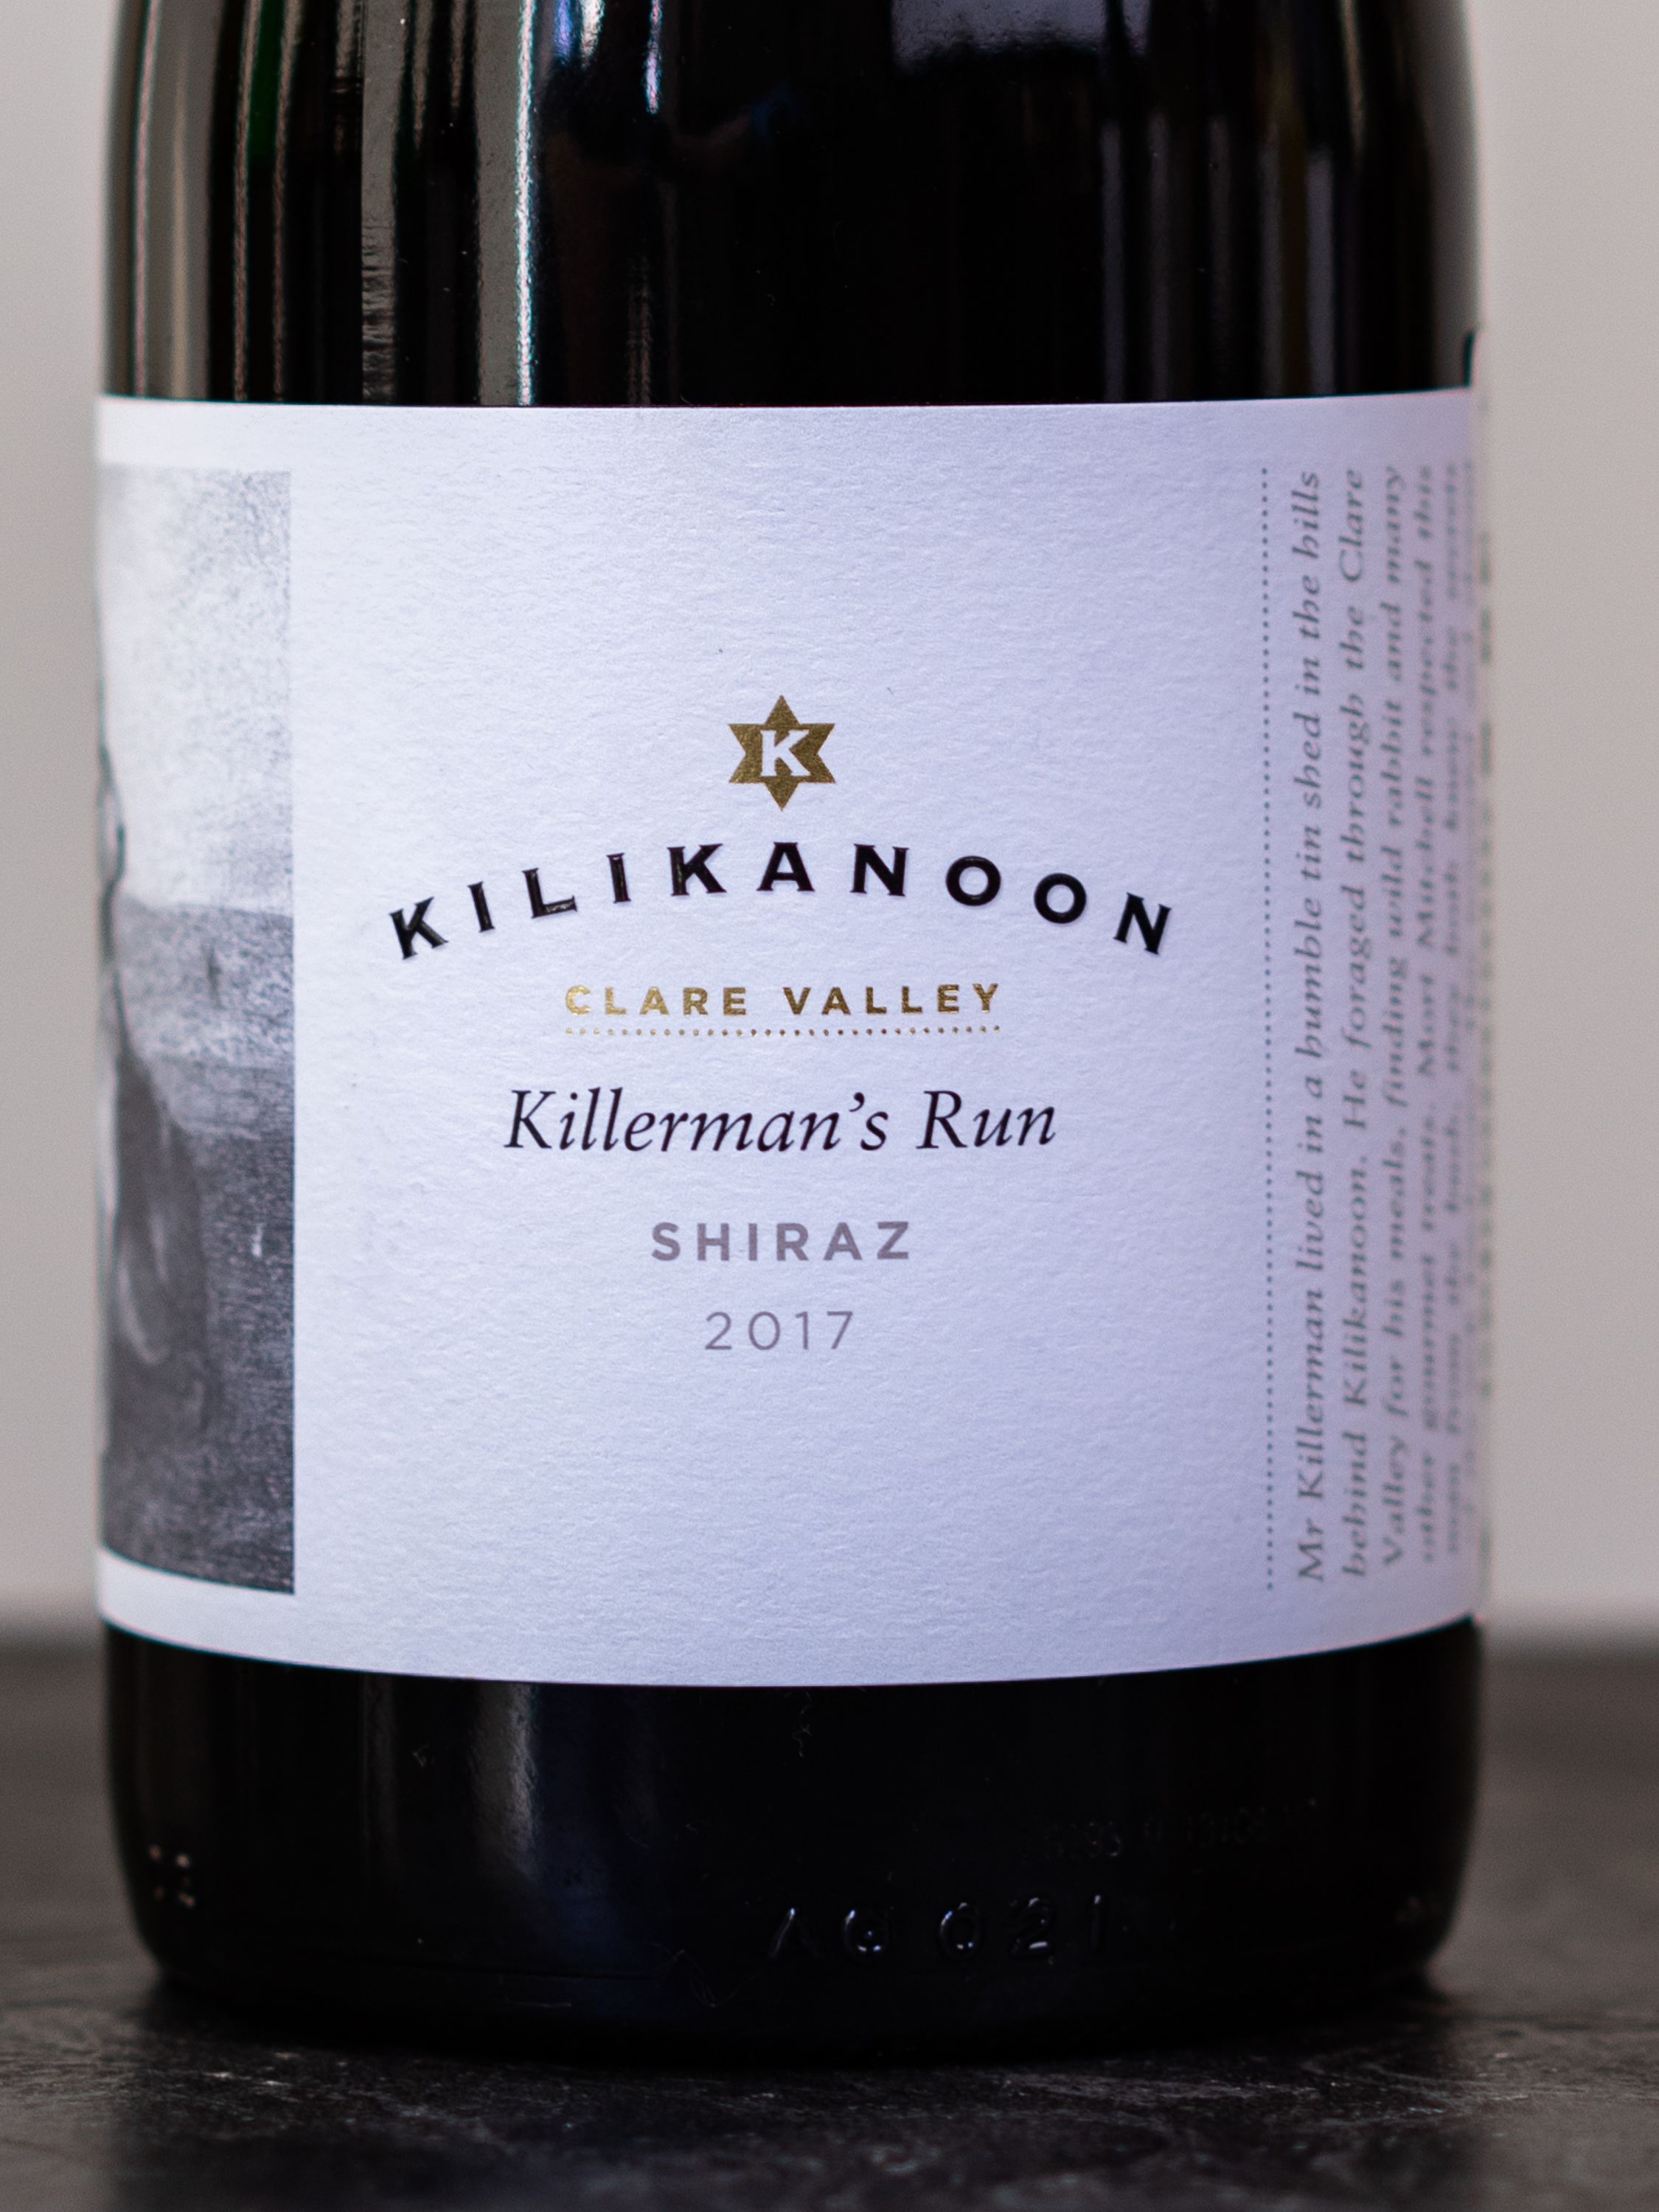 Вино Kilikanoon Shiraz Clare Valley Killerman`s Run / Киликанун Шираз Клэр Велли Киллерман`з Ран